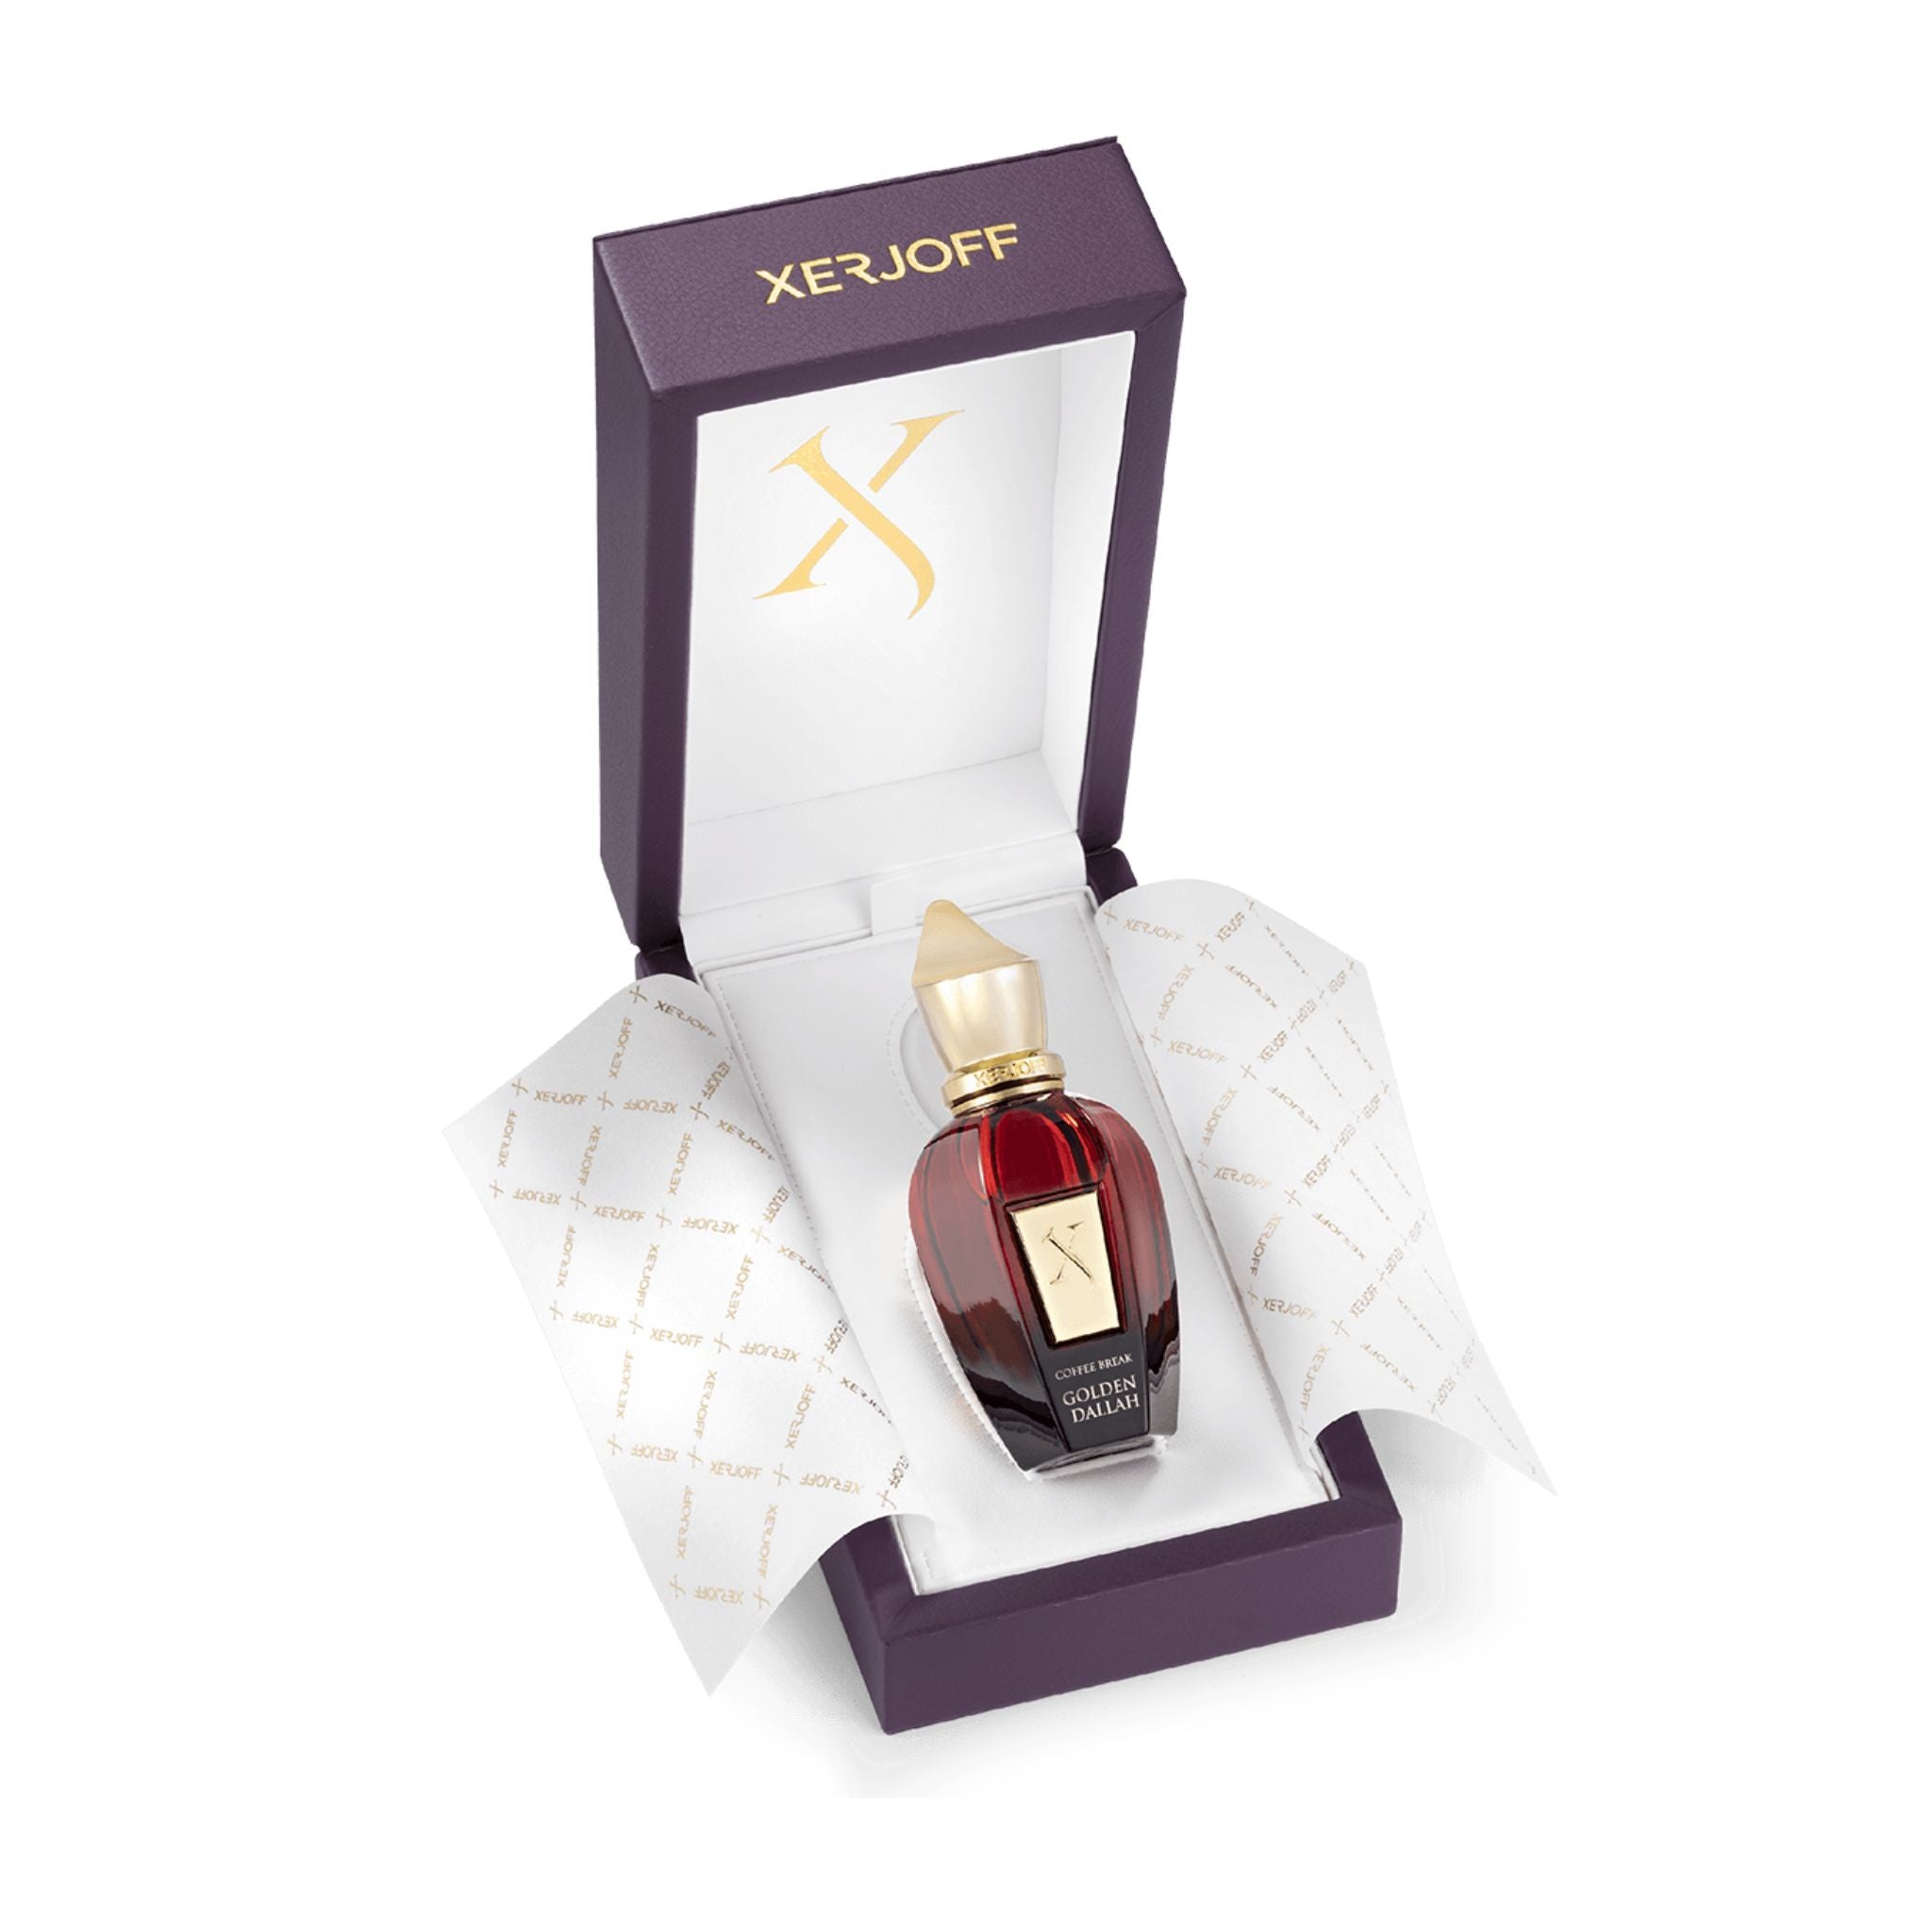 Xerjoff Golden Dallah spicy fragrance